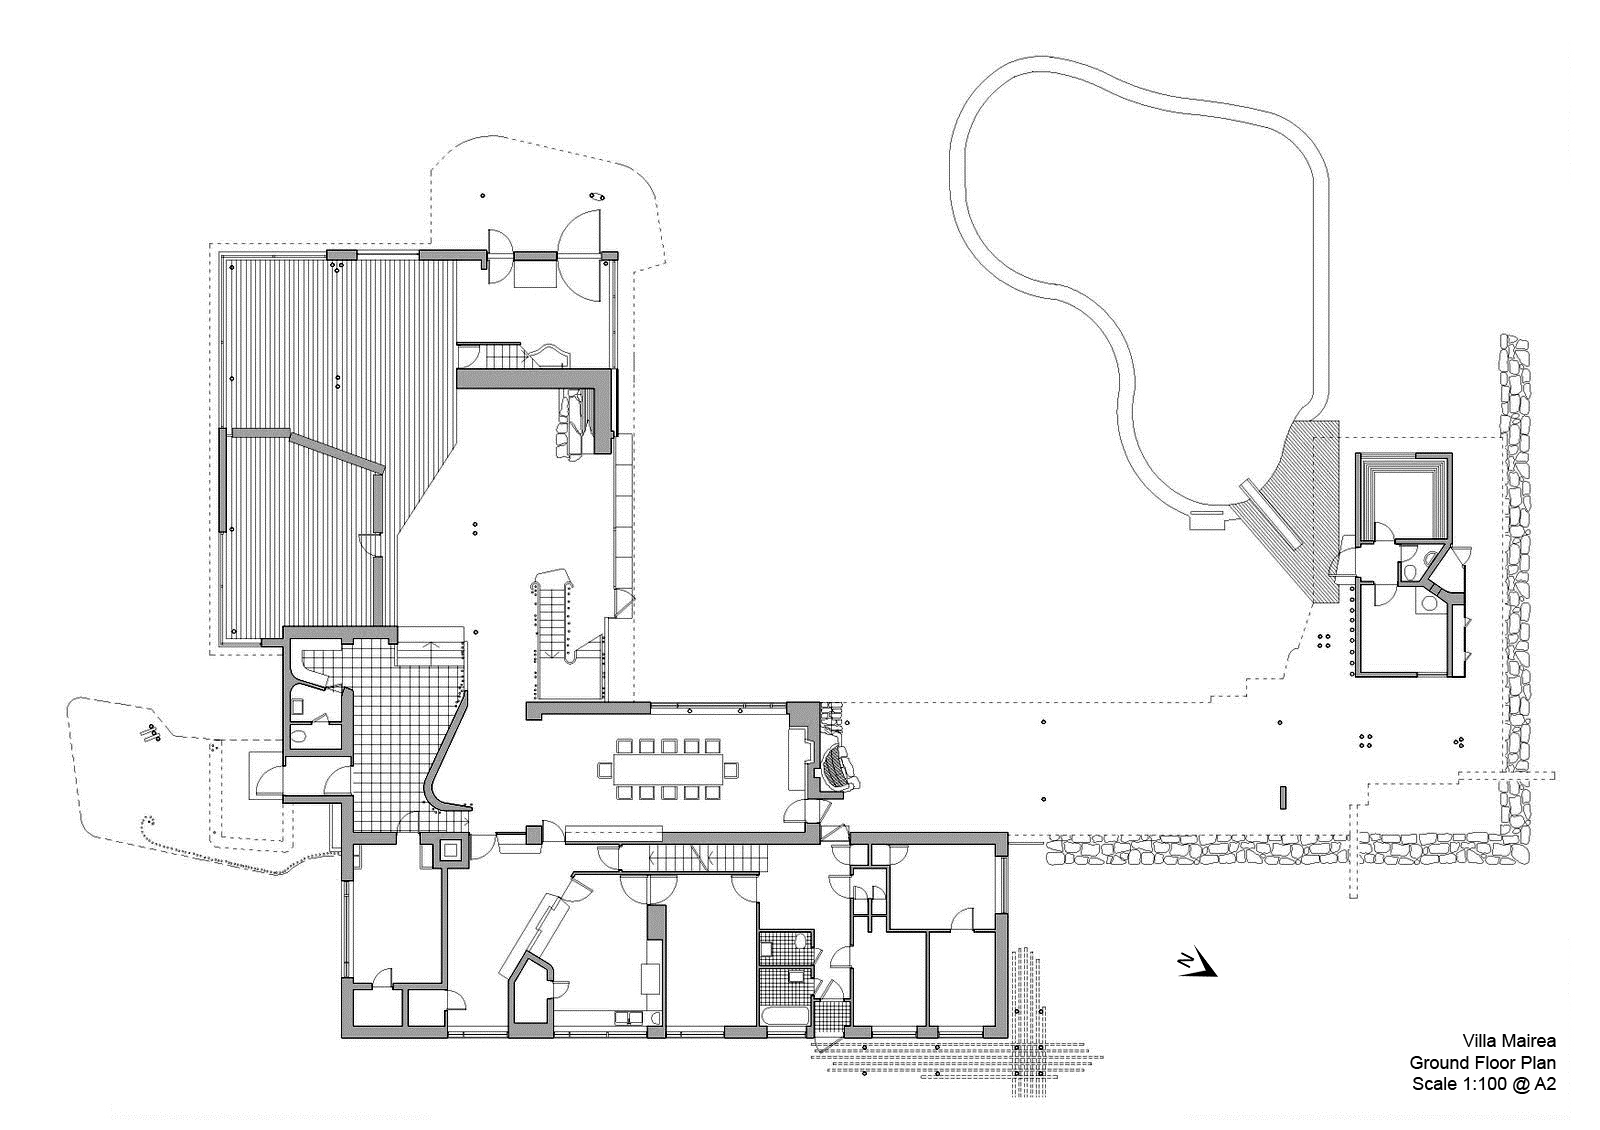 Design Studio 3 Villa Mairea Final Ground Floor Plans